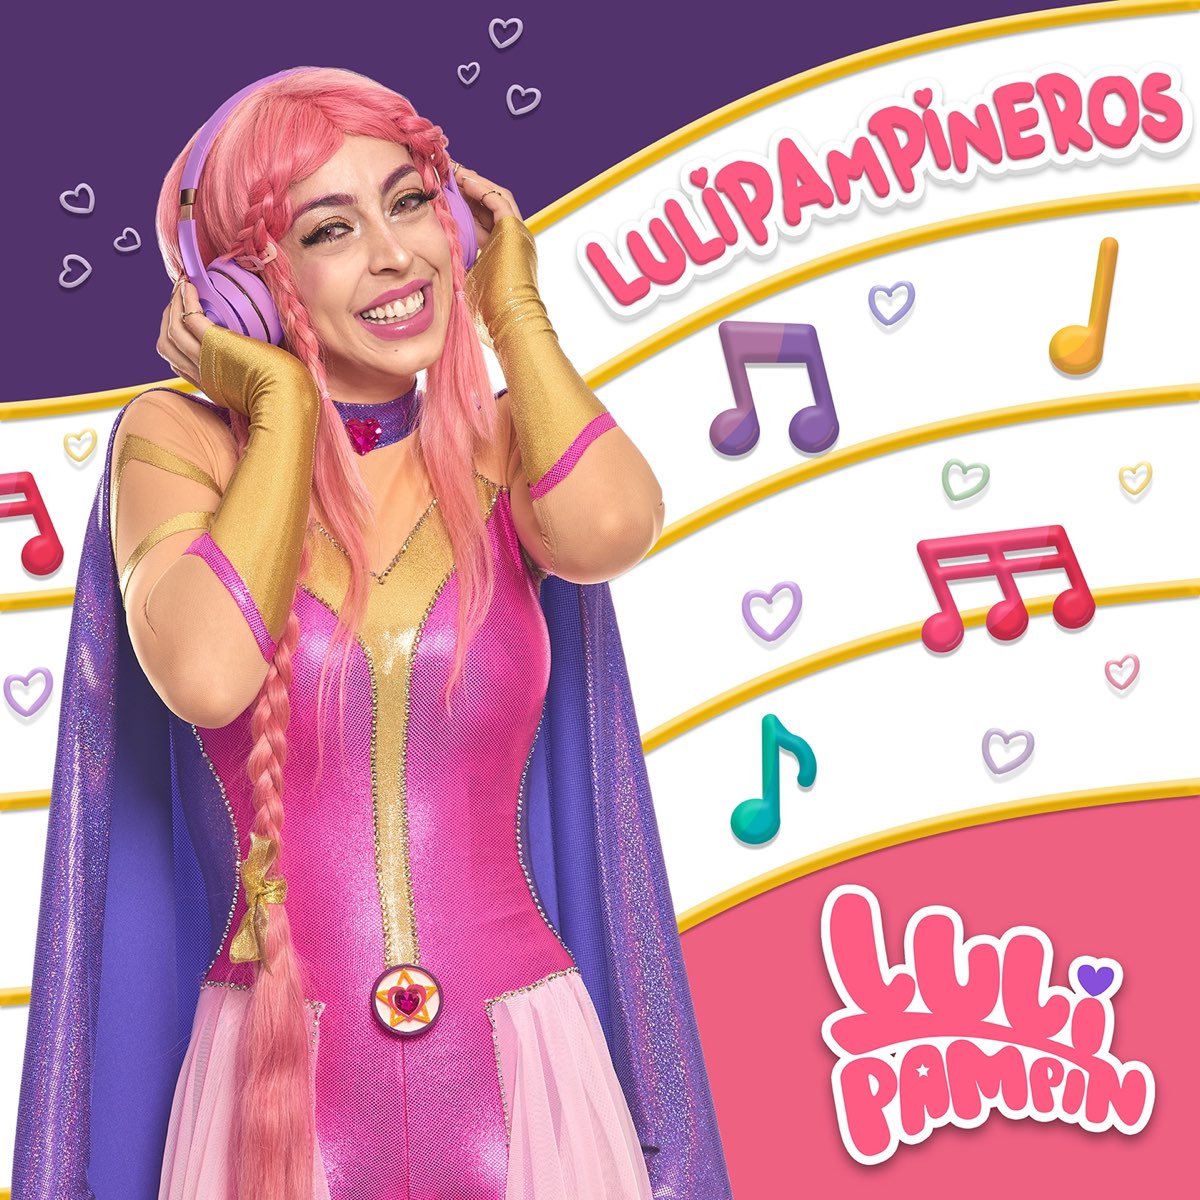 Lulipampineros” álbum de Luli Pampín en Apple Music